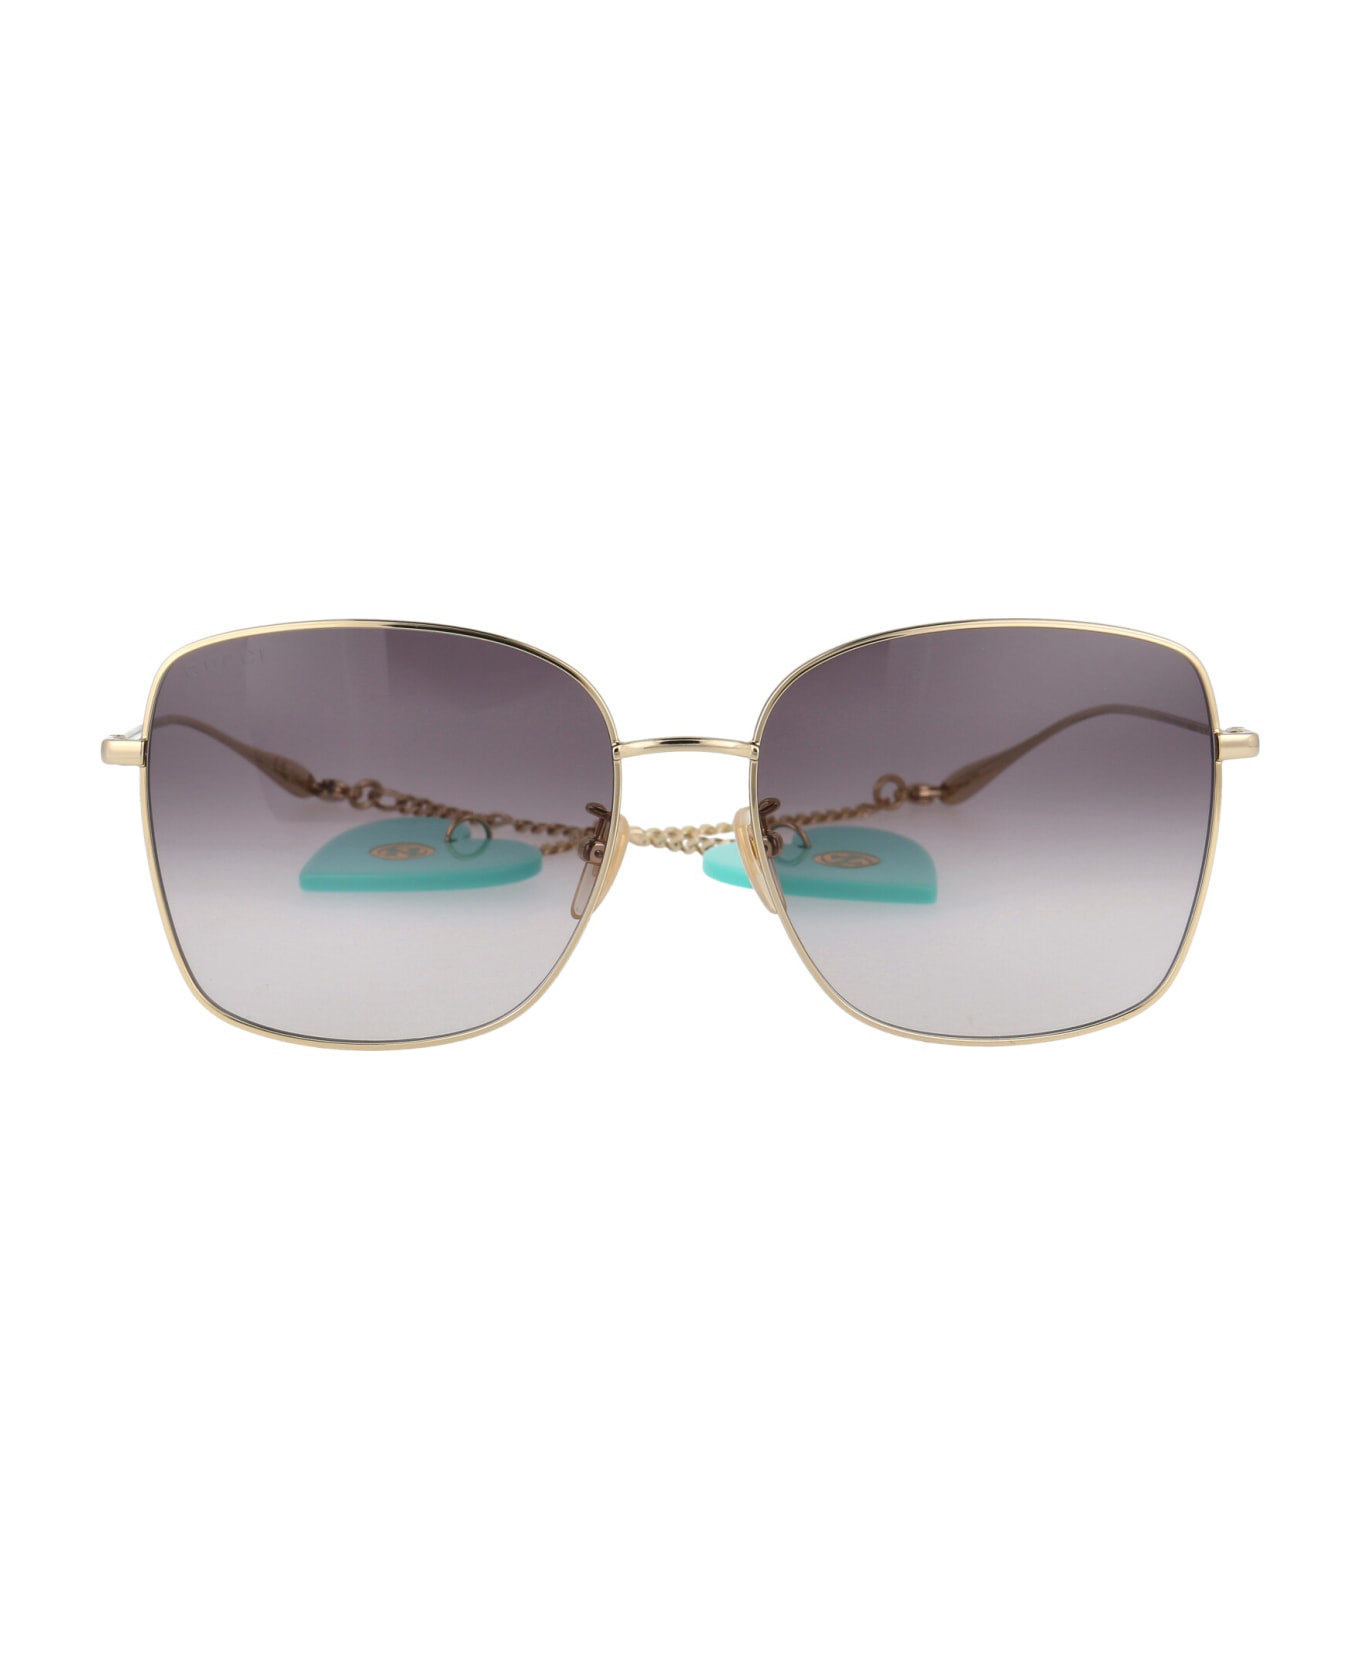 Gucci Eyewear Gg1030sk Sunglasses - 003 GOLD GOLD GREY サングラス